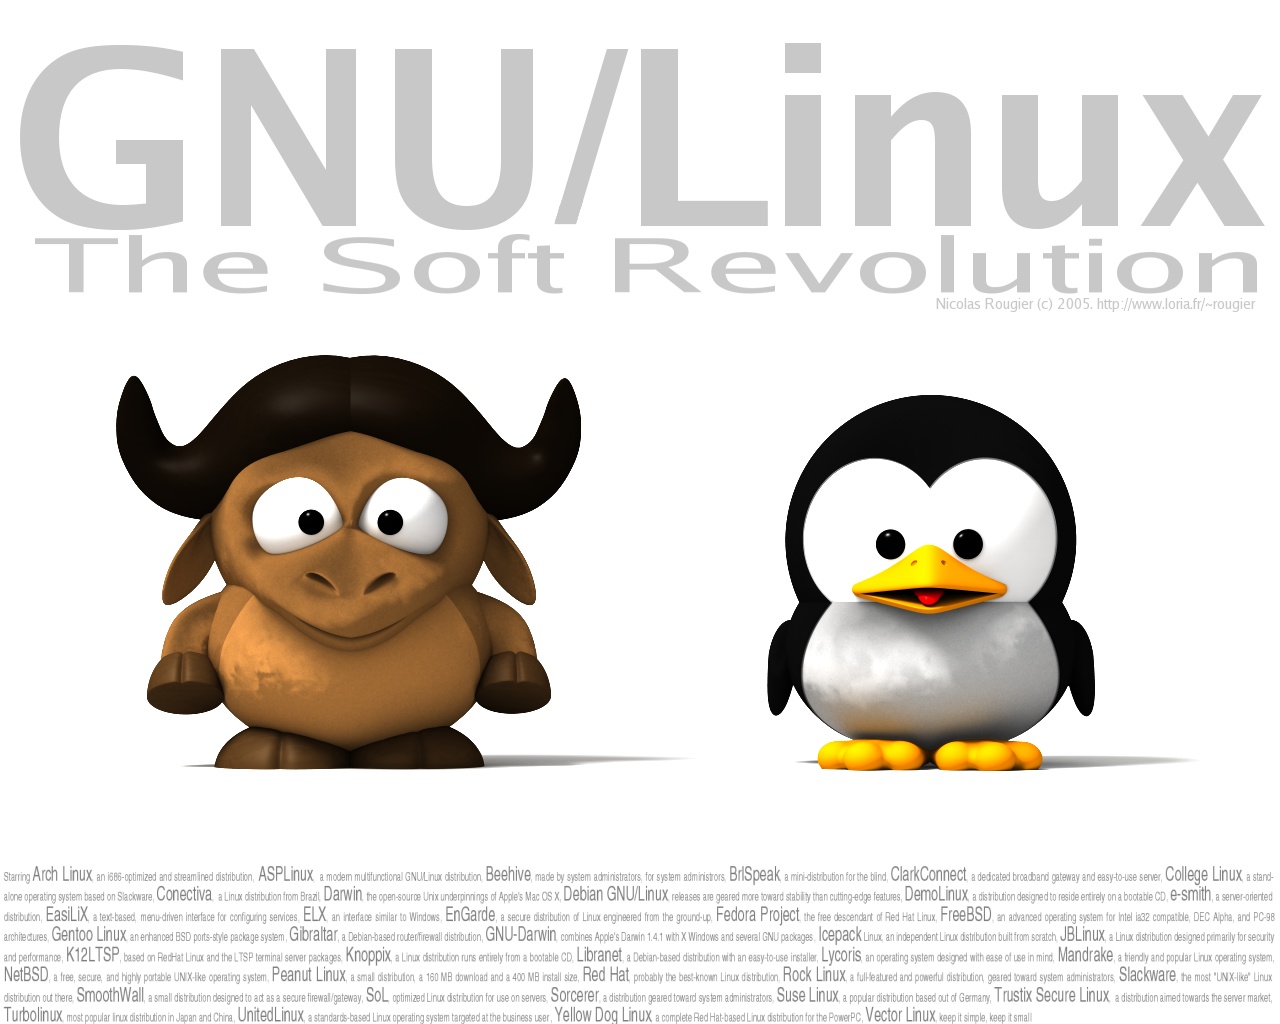 https://blogger.googleusercontent.com/img/b/R29vZ2xl/AVvXsEjcmWfdElOtwcMzgOtLRBVL4rV_qK7-7aFI2WL2zDxG0Xre9YZPrkGlvfURZBMcyKXIUGLvZ7LhXsFJyqd5zr7UEDU7zeObCcapyEGdkDug6JUCKUYN21KK6Oa0gPzybfnYQJcJJQwGza7L/s1600/Windows-Linux-Beautiful-Wallpapers-08.jpg